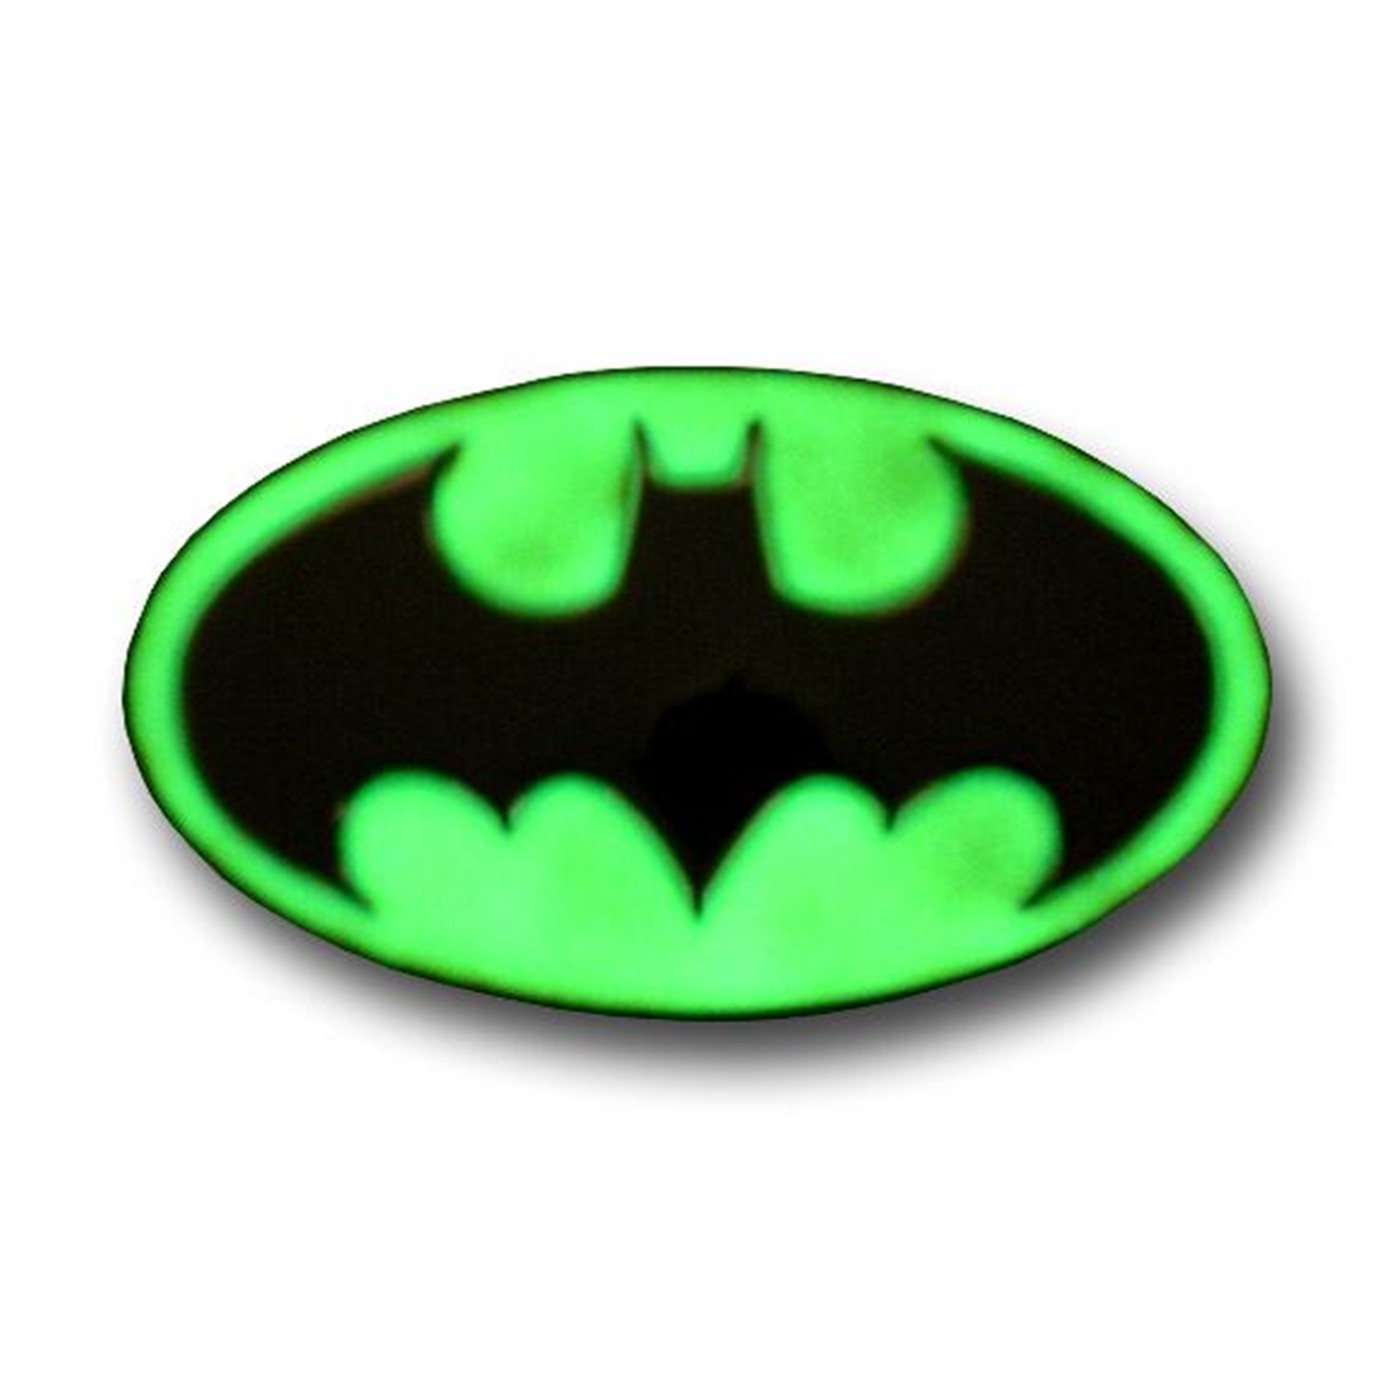 Batman Symbol Belt Buckle Glow in the Dark